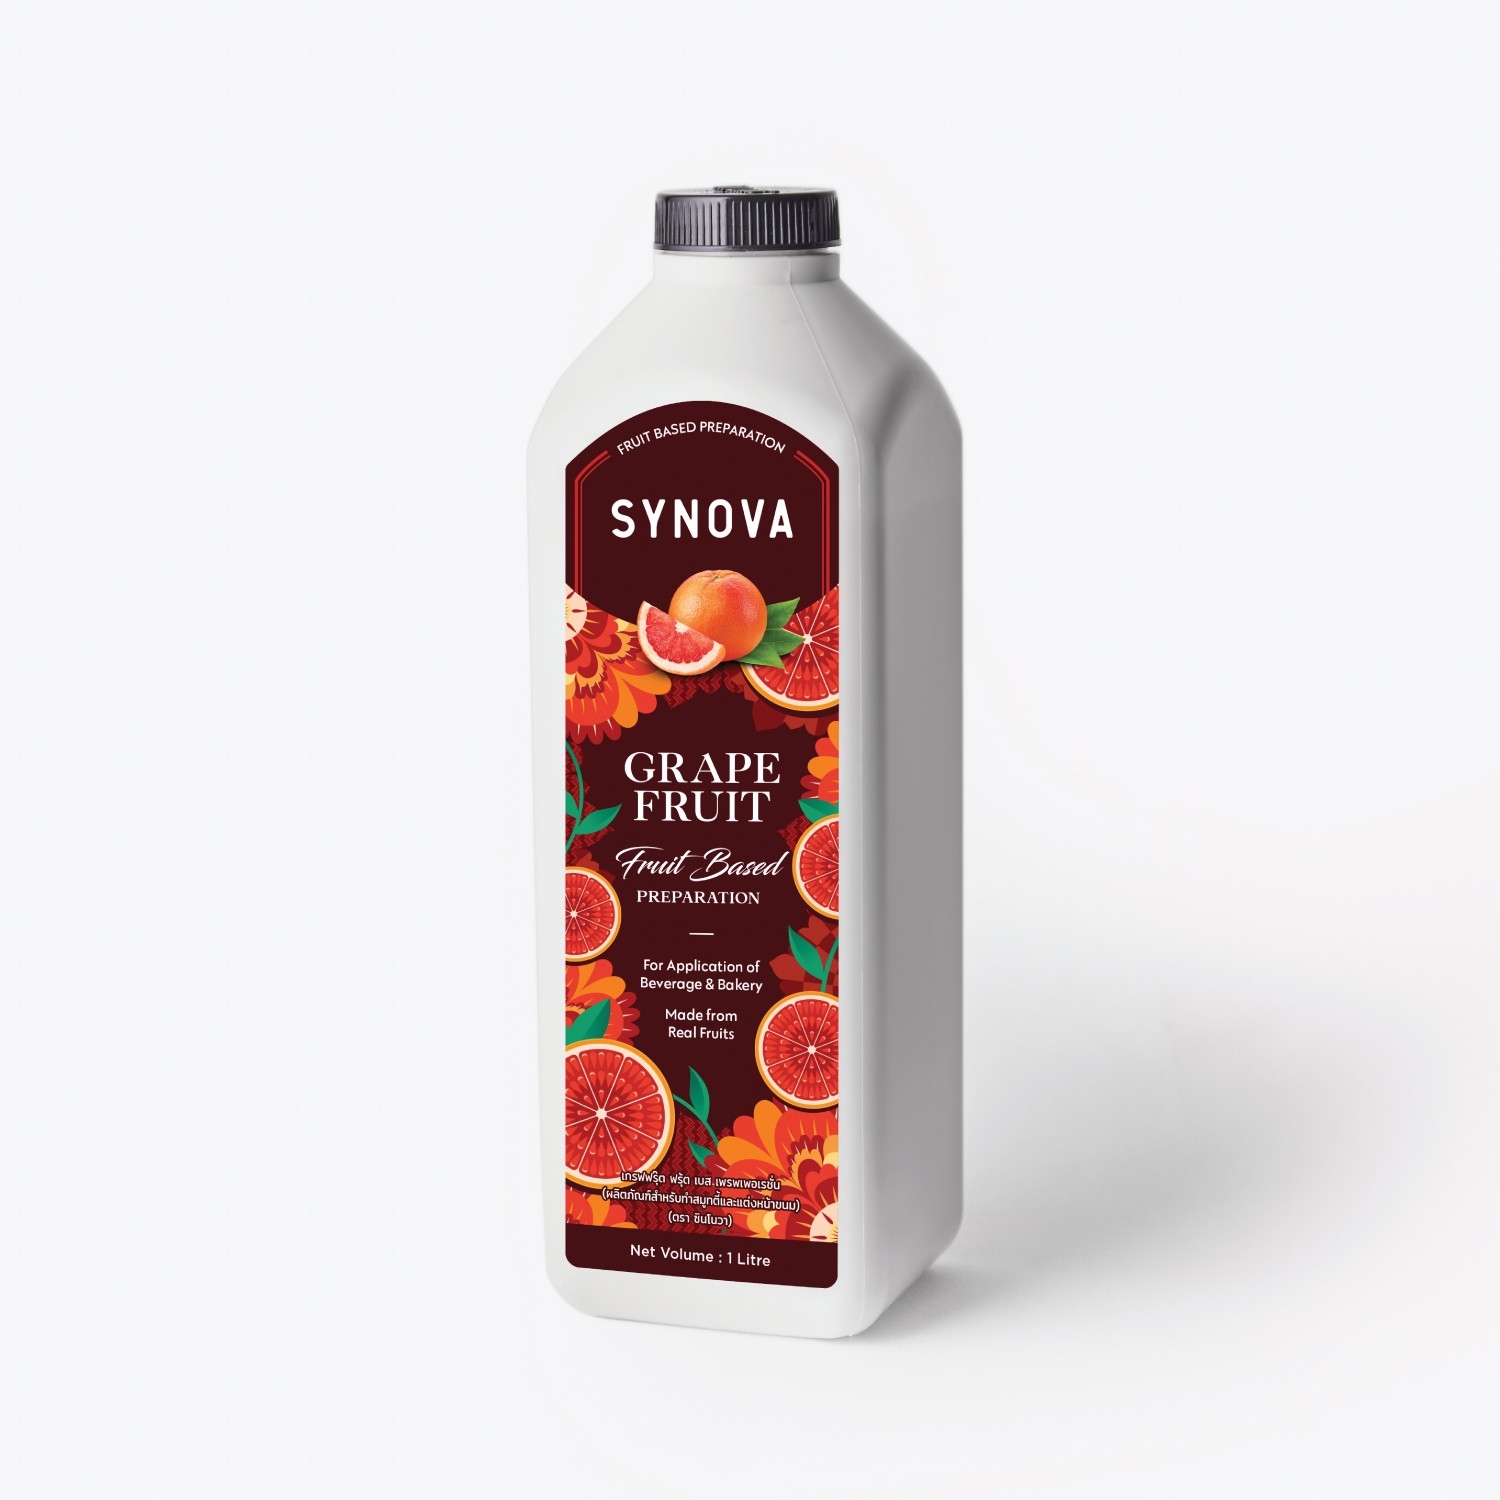 SYNOVA Grapefruit Fruit Based Preparation (Box)